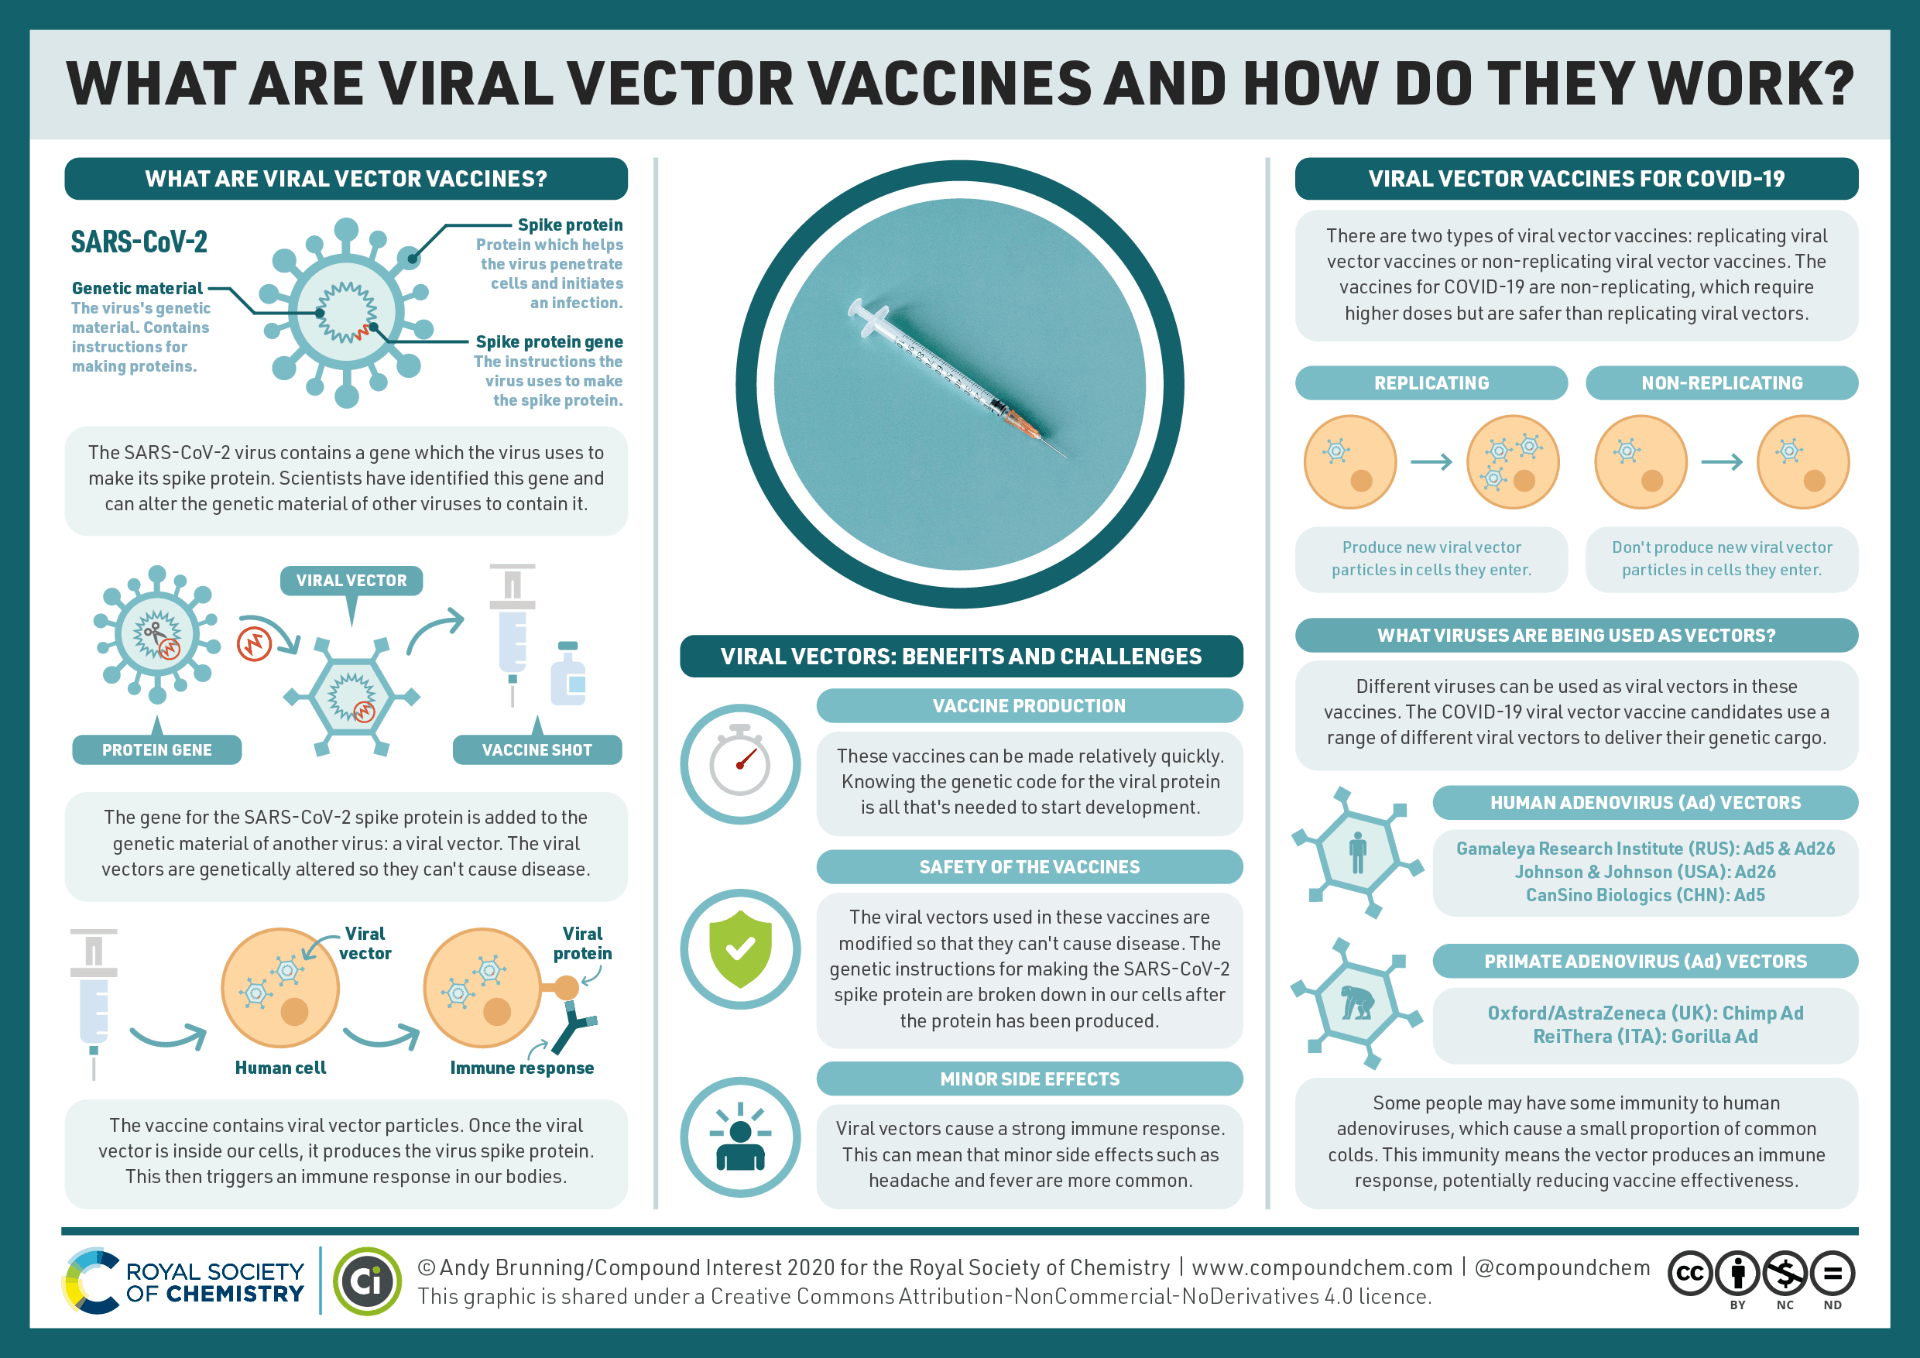 An infographic describing how viral vector vaccines work